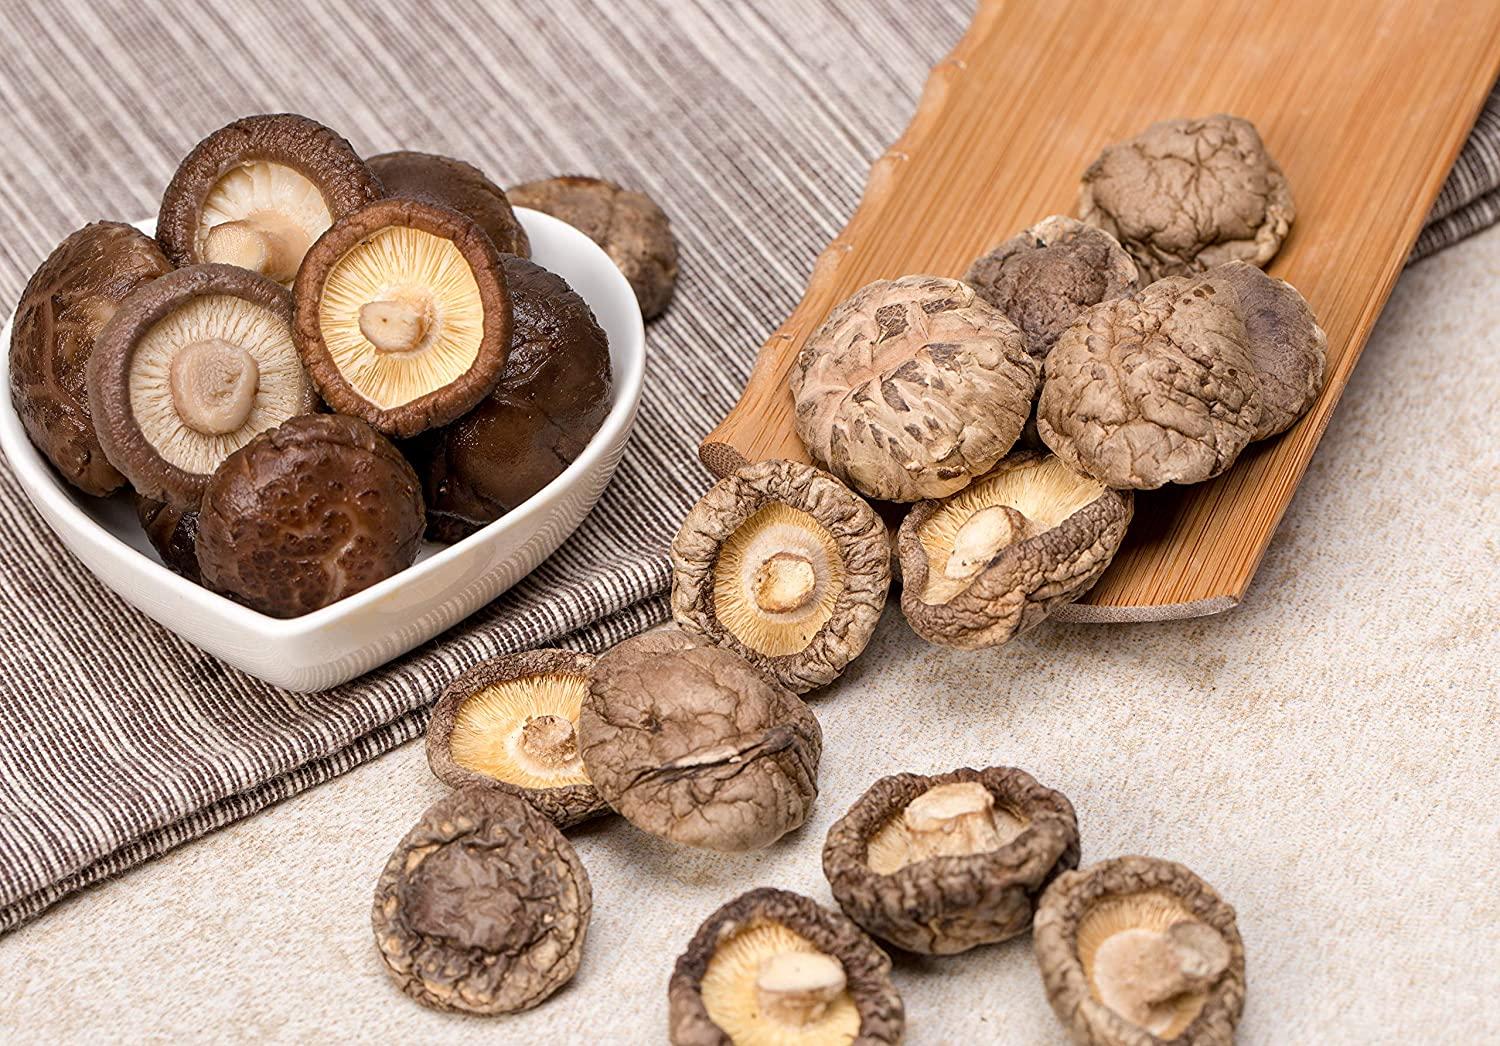 Shiitake Bulk Fresh - Mousam Valley Mushrooms